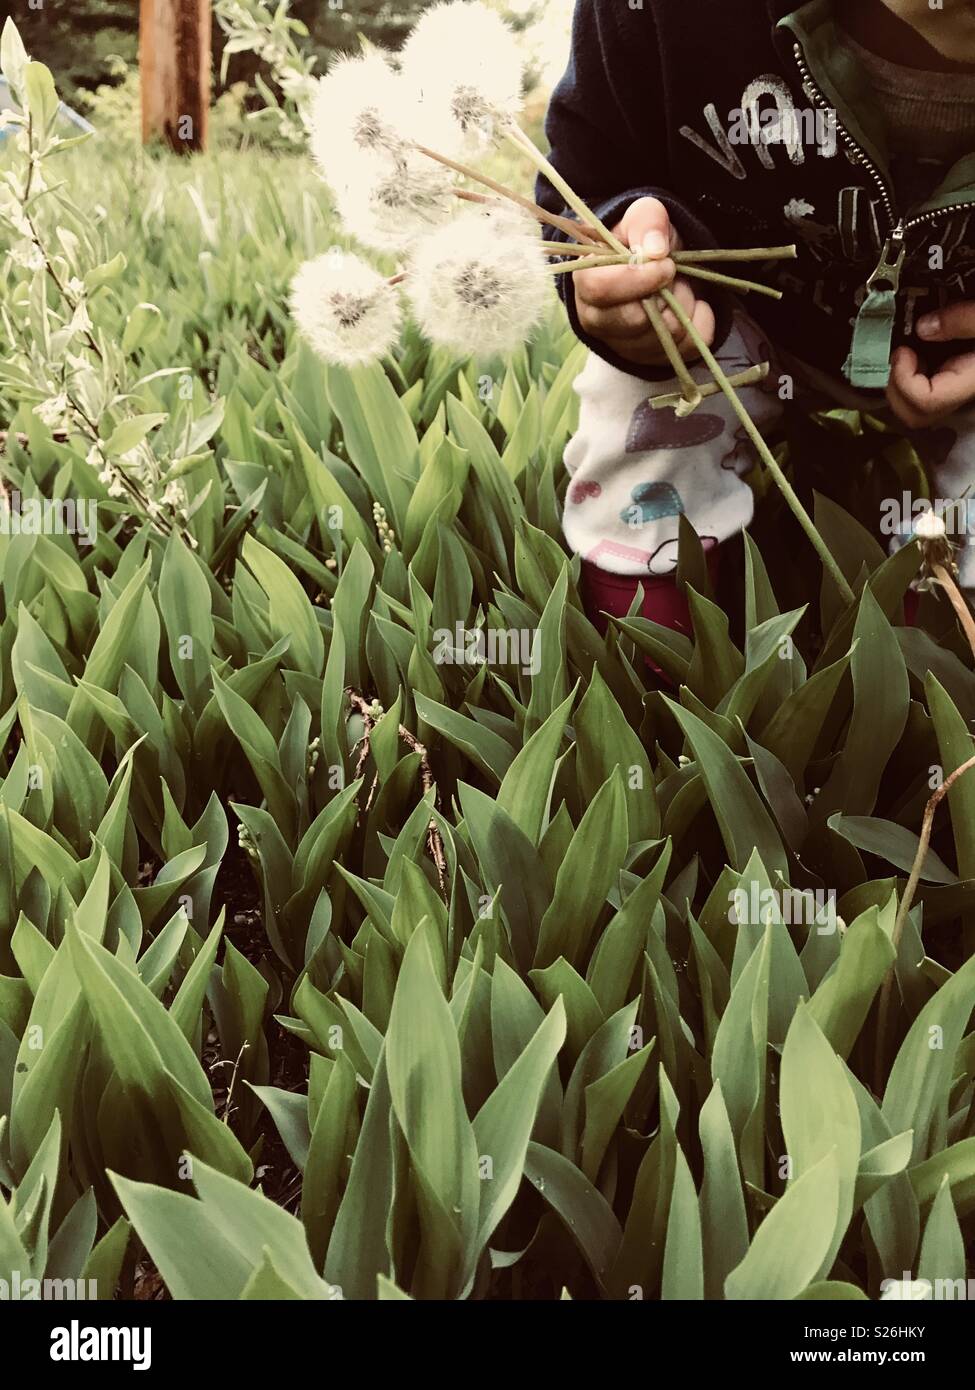 Girl collecting dandelions Stock Photo